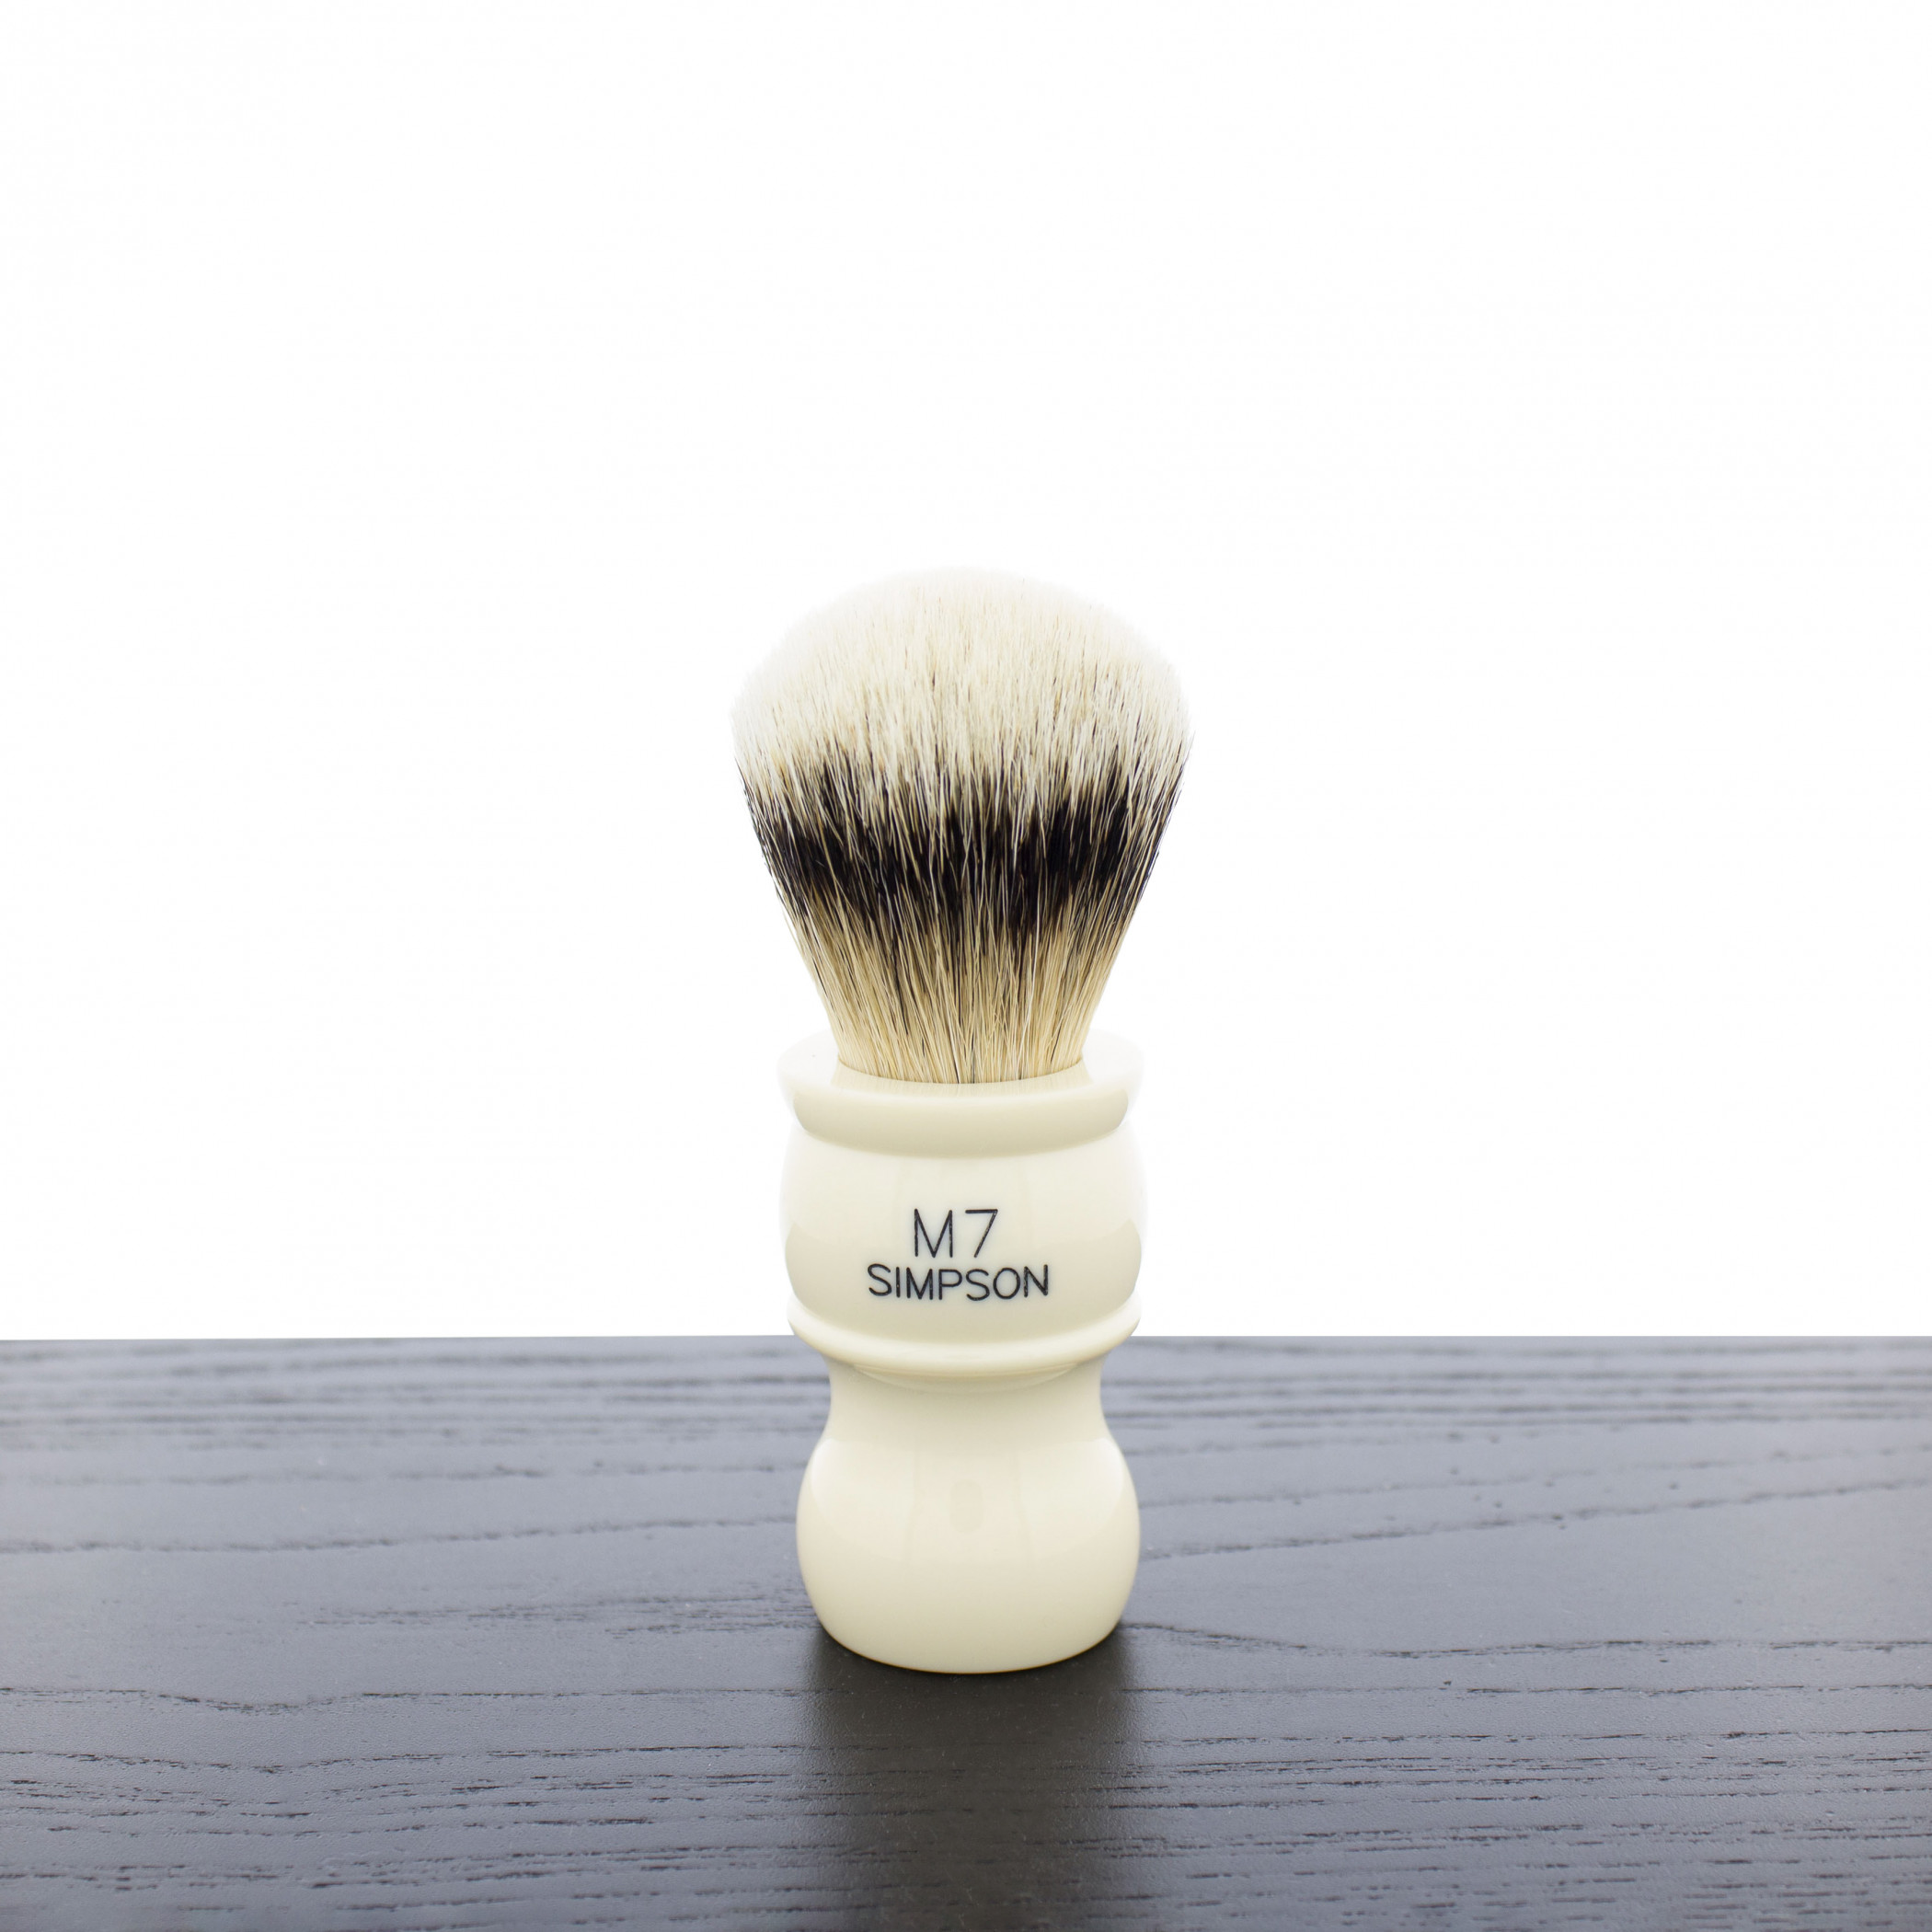 Product image 0 for Simpson M7 Super Badger Shaving Brush, Ivory